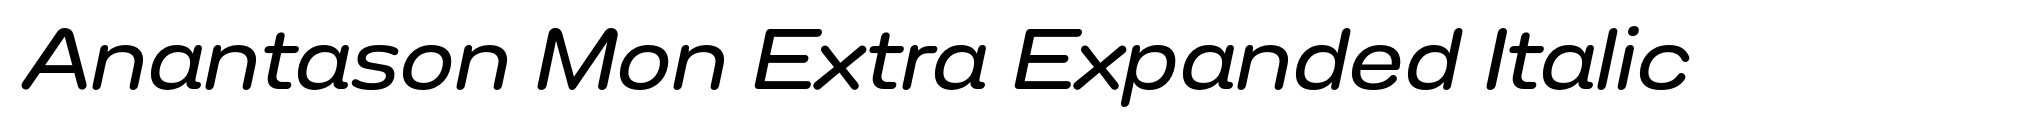 Anantason Mon Extra Expanded Italic image